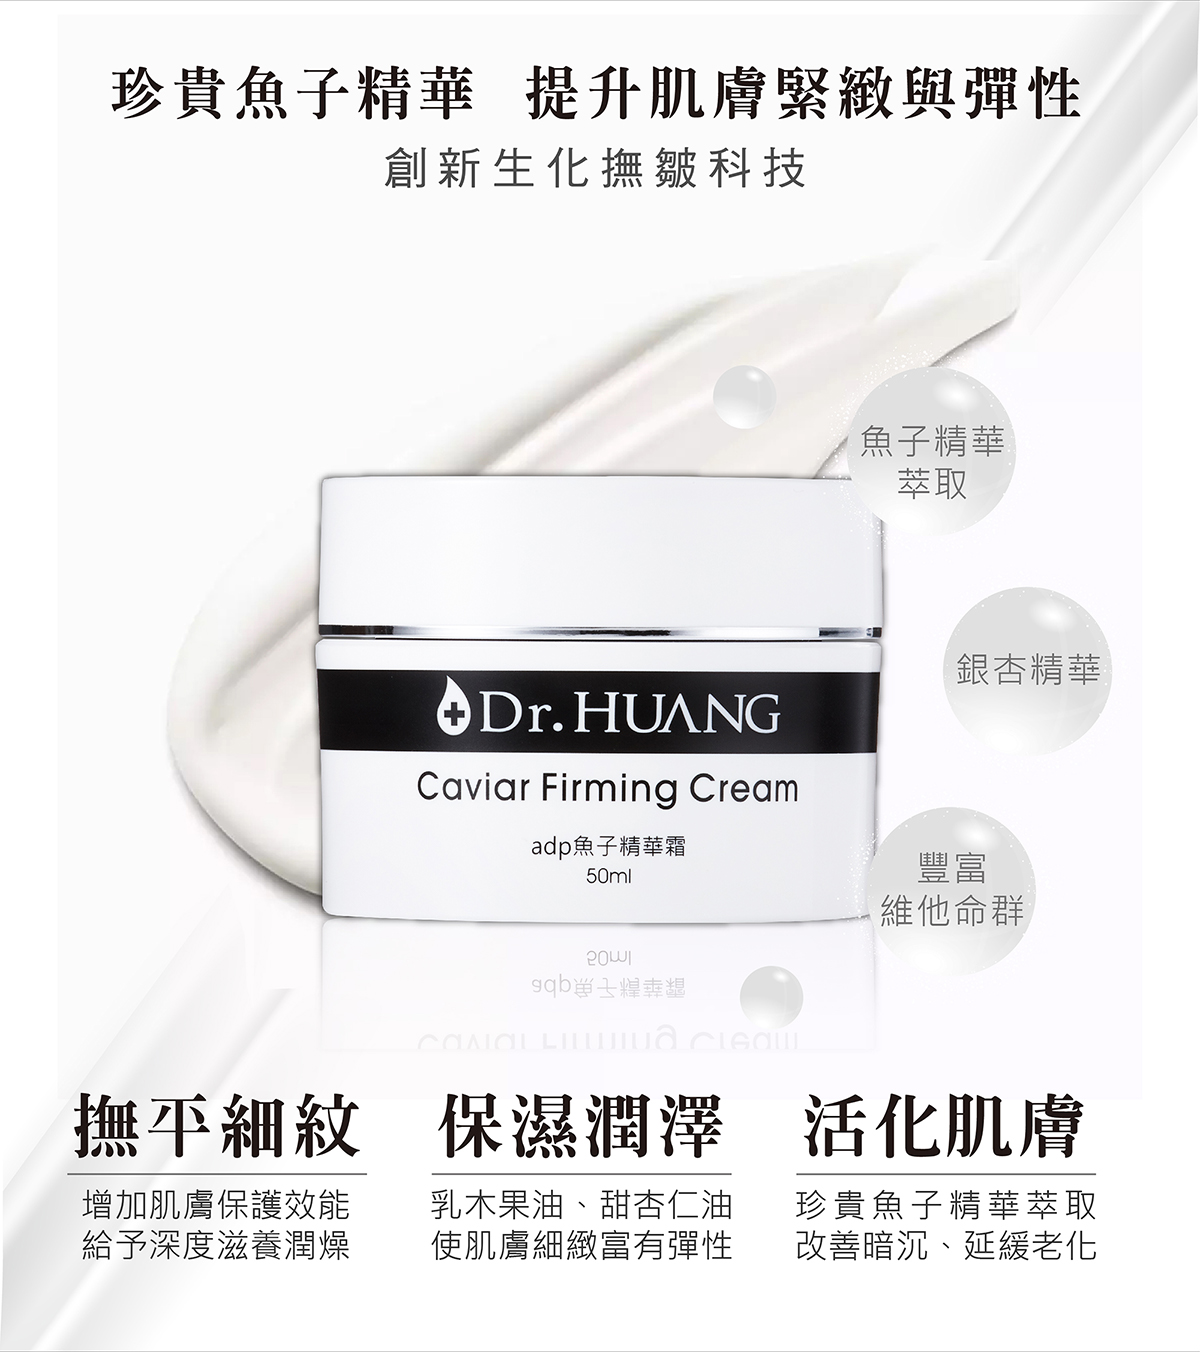 Dr.HUANGadp系列魚子精華霜珍貴魚子精華提升肌膚緊緻與彈性浮萍細紋保濕潤澤活化肌膚